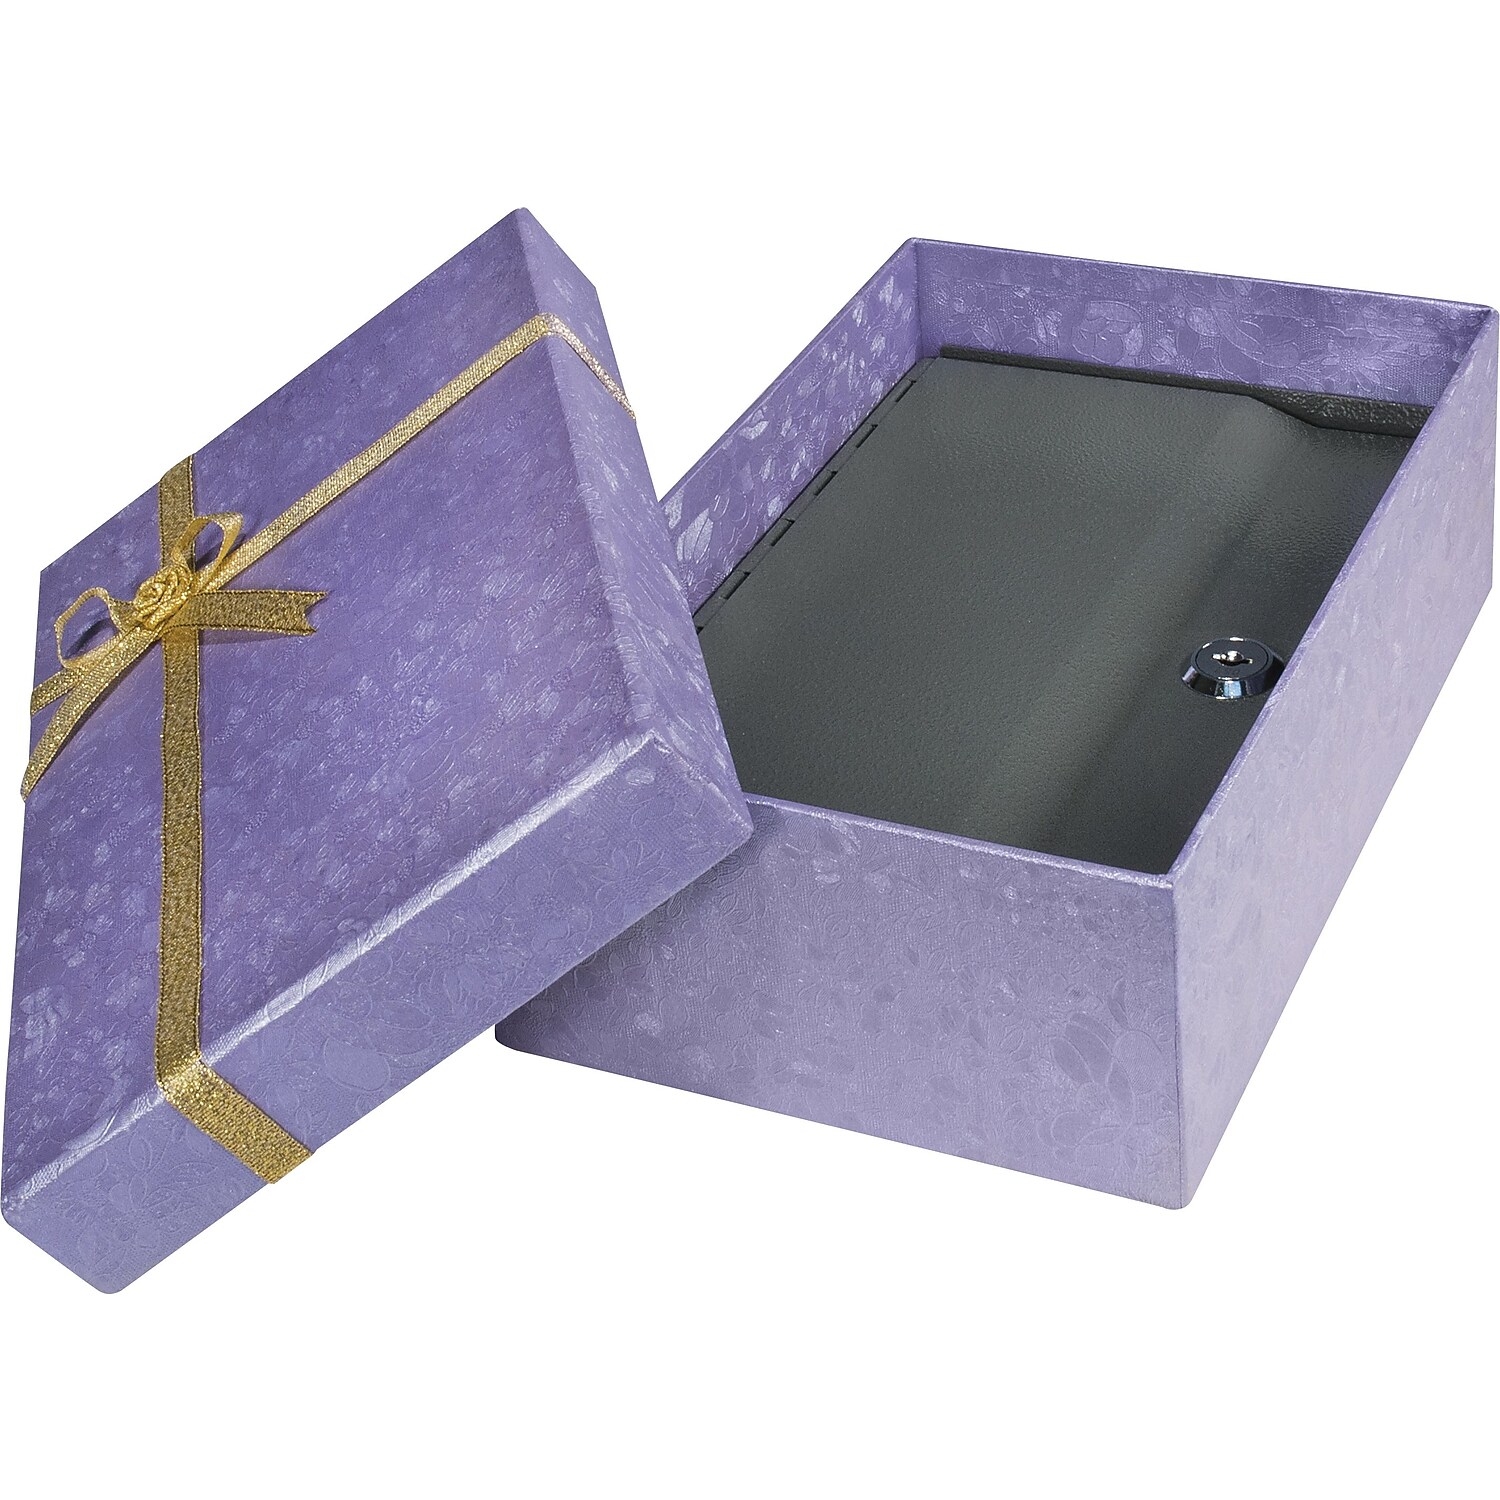 Barska Gift Box Safe with Key Lock CB11796 - image 1 of 5